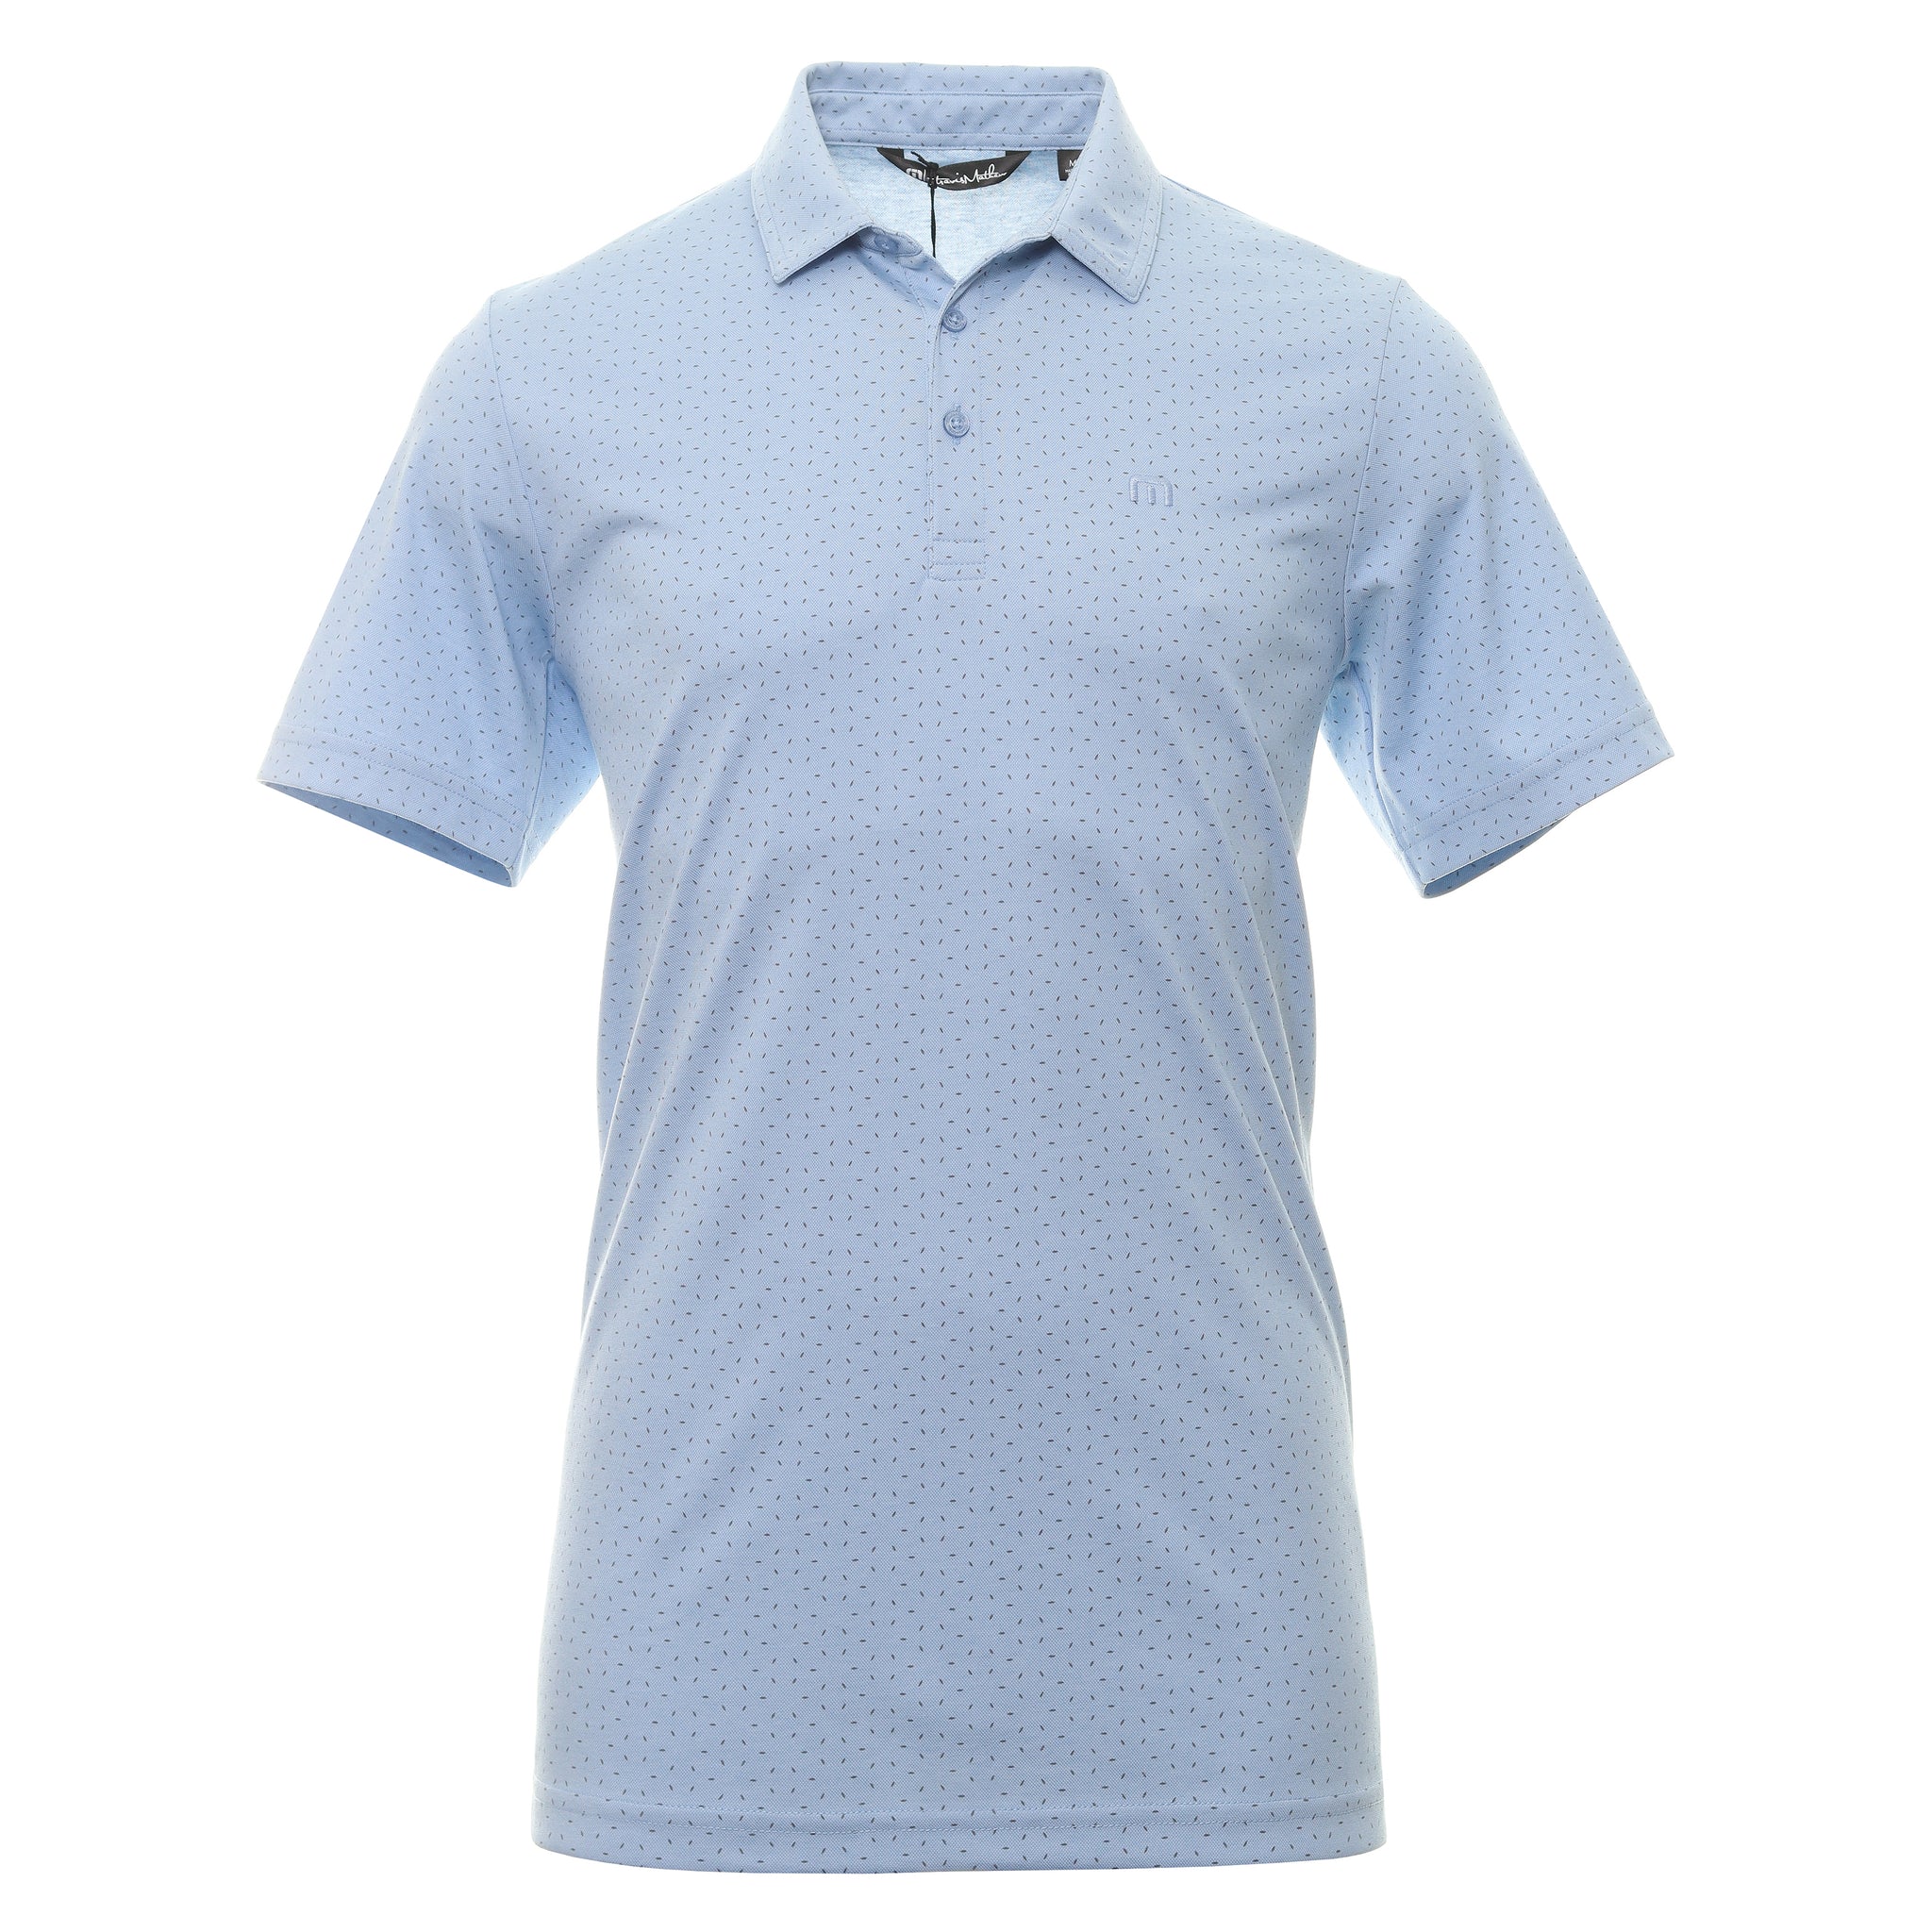 travismathew-carnaval-polo-shirt-1my110-heather-bel-air-blue